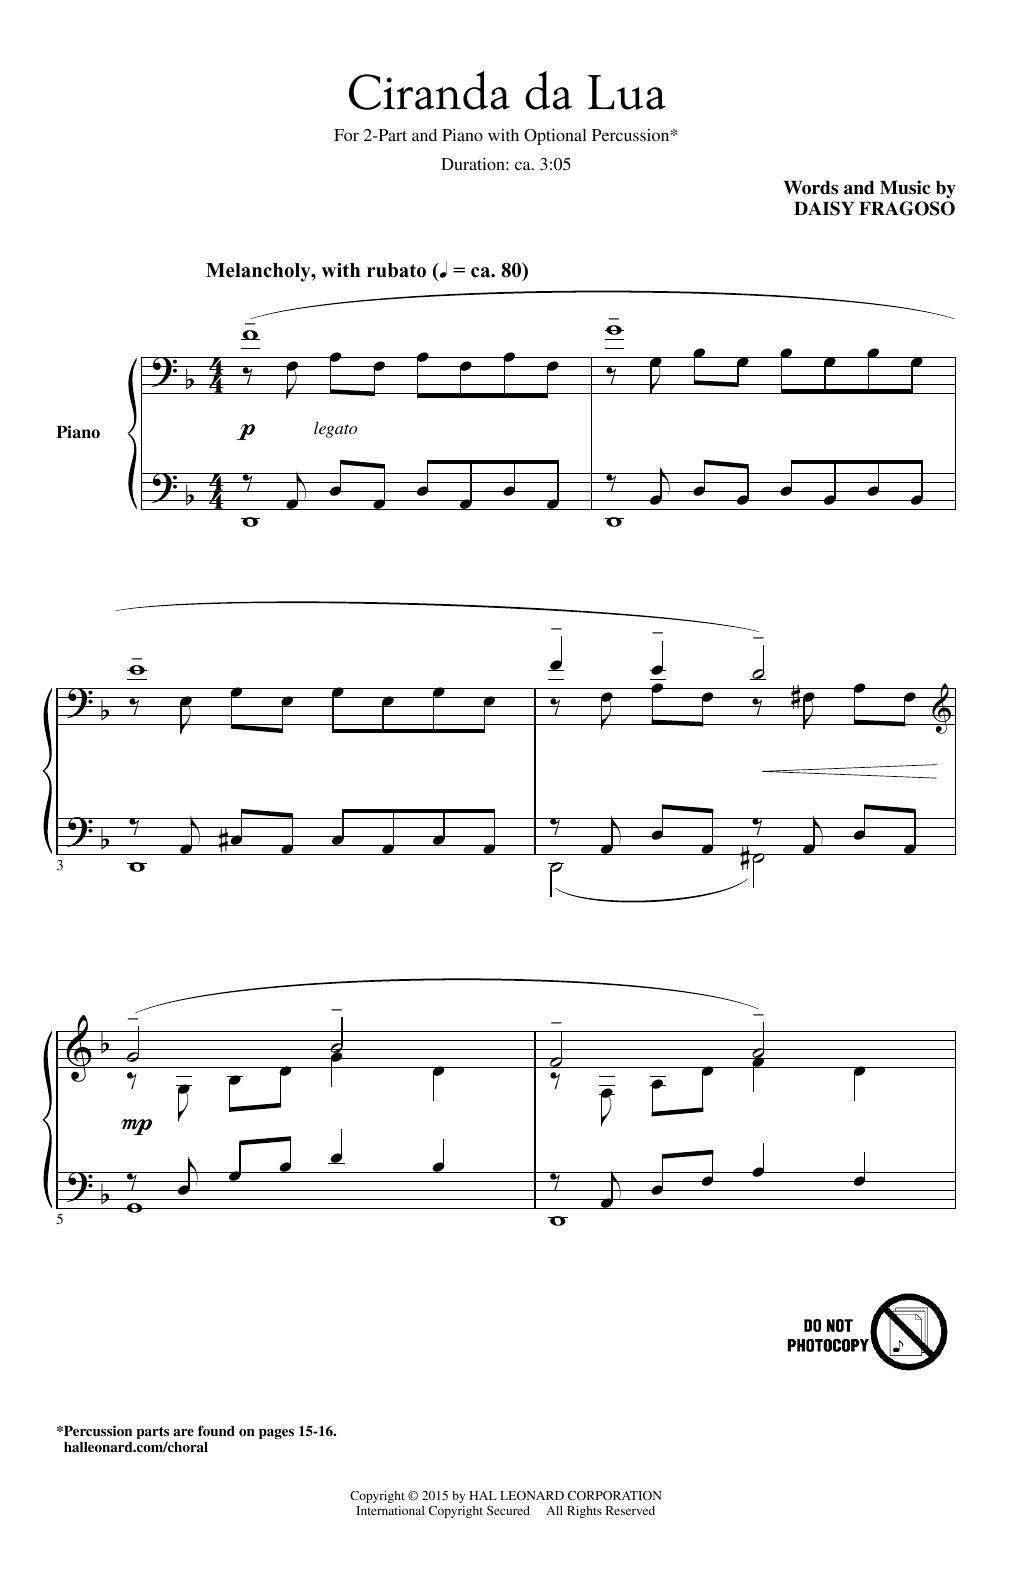 Daisy Fragoso Ciranda Da Lua Sheet Music Notes & Chords for 2-Part Choir - Download or Print PDF